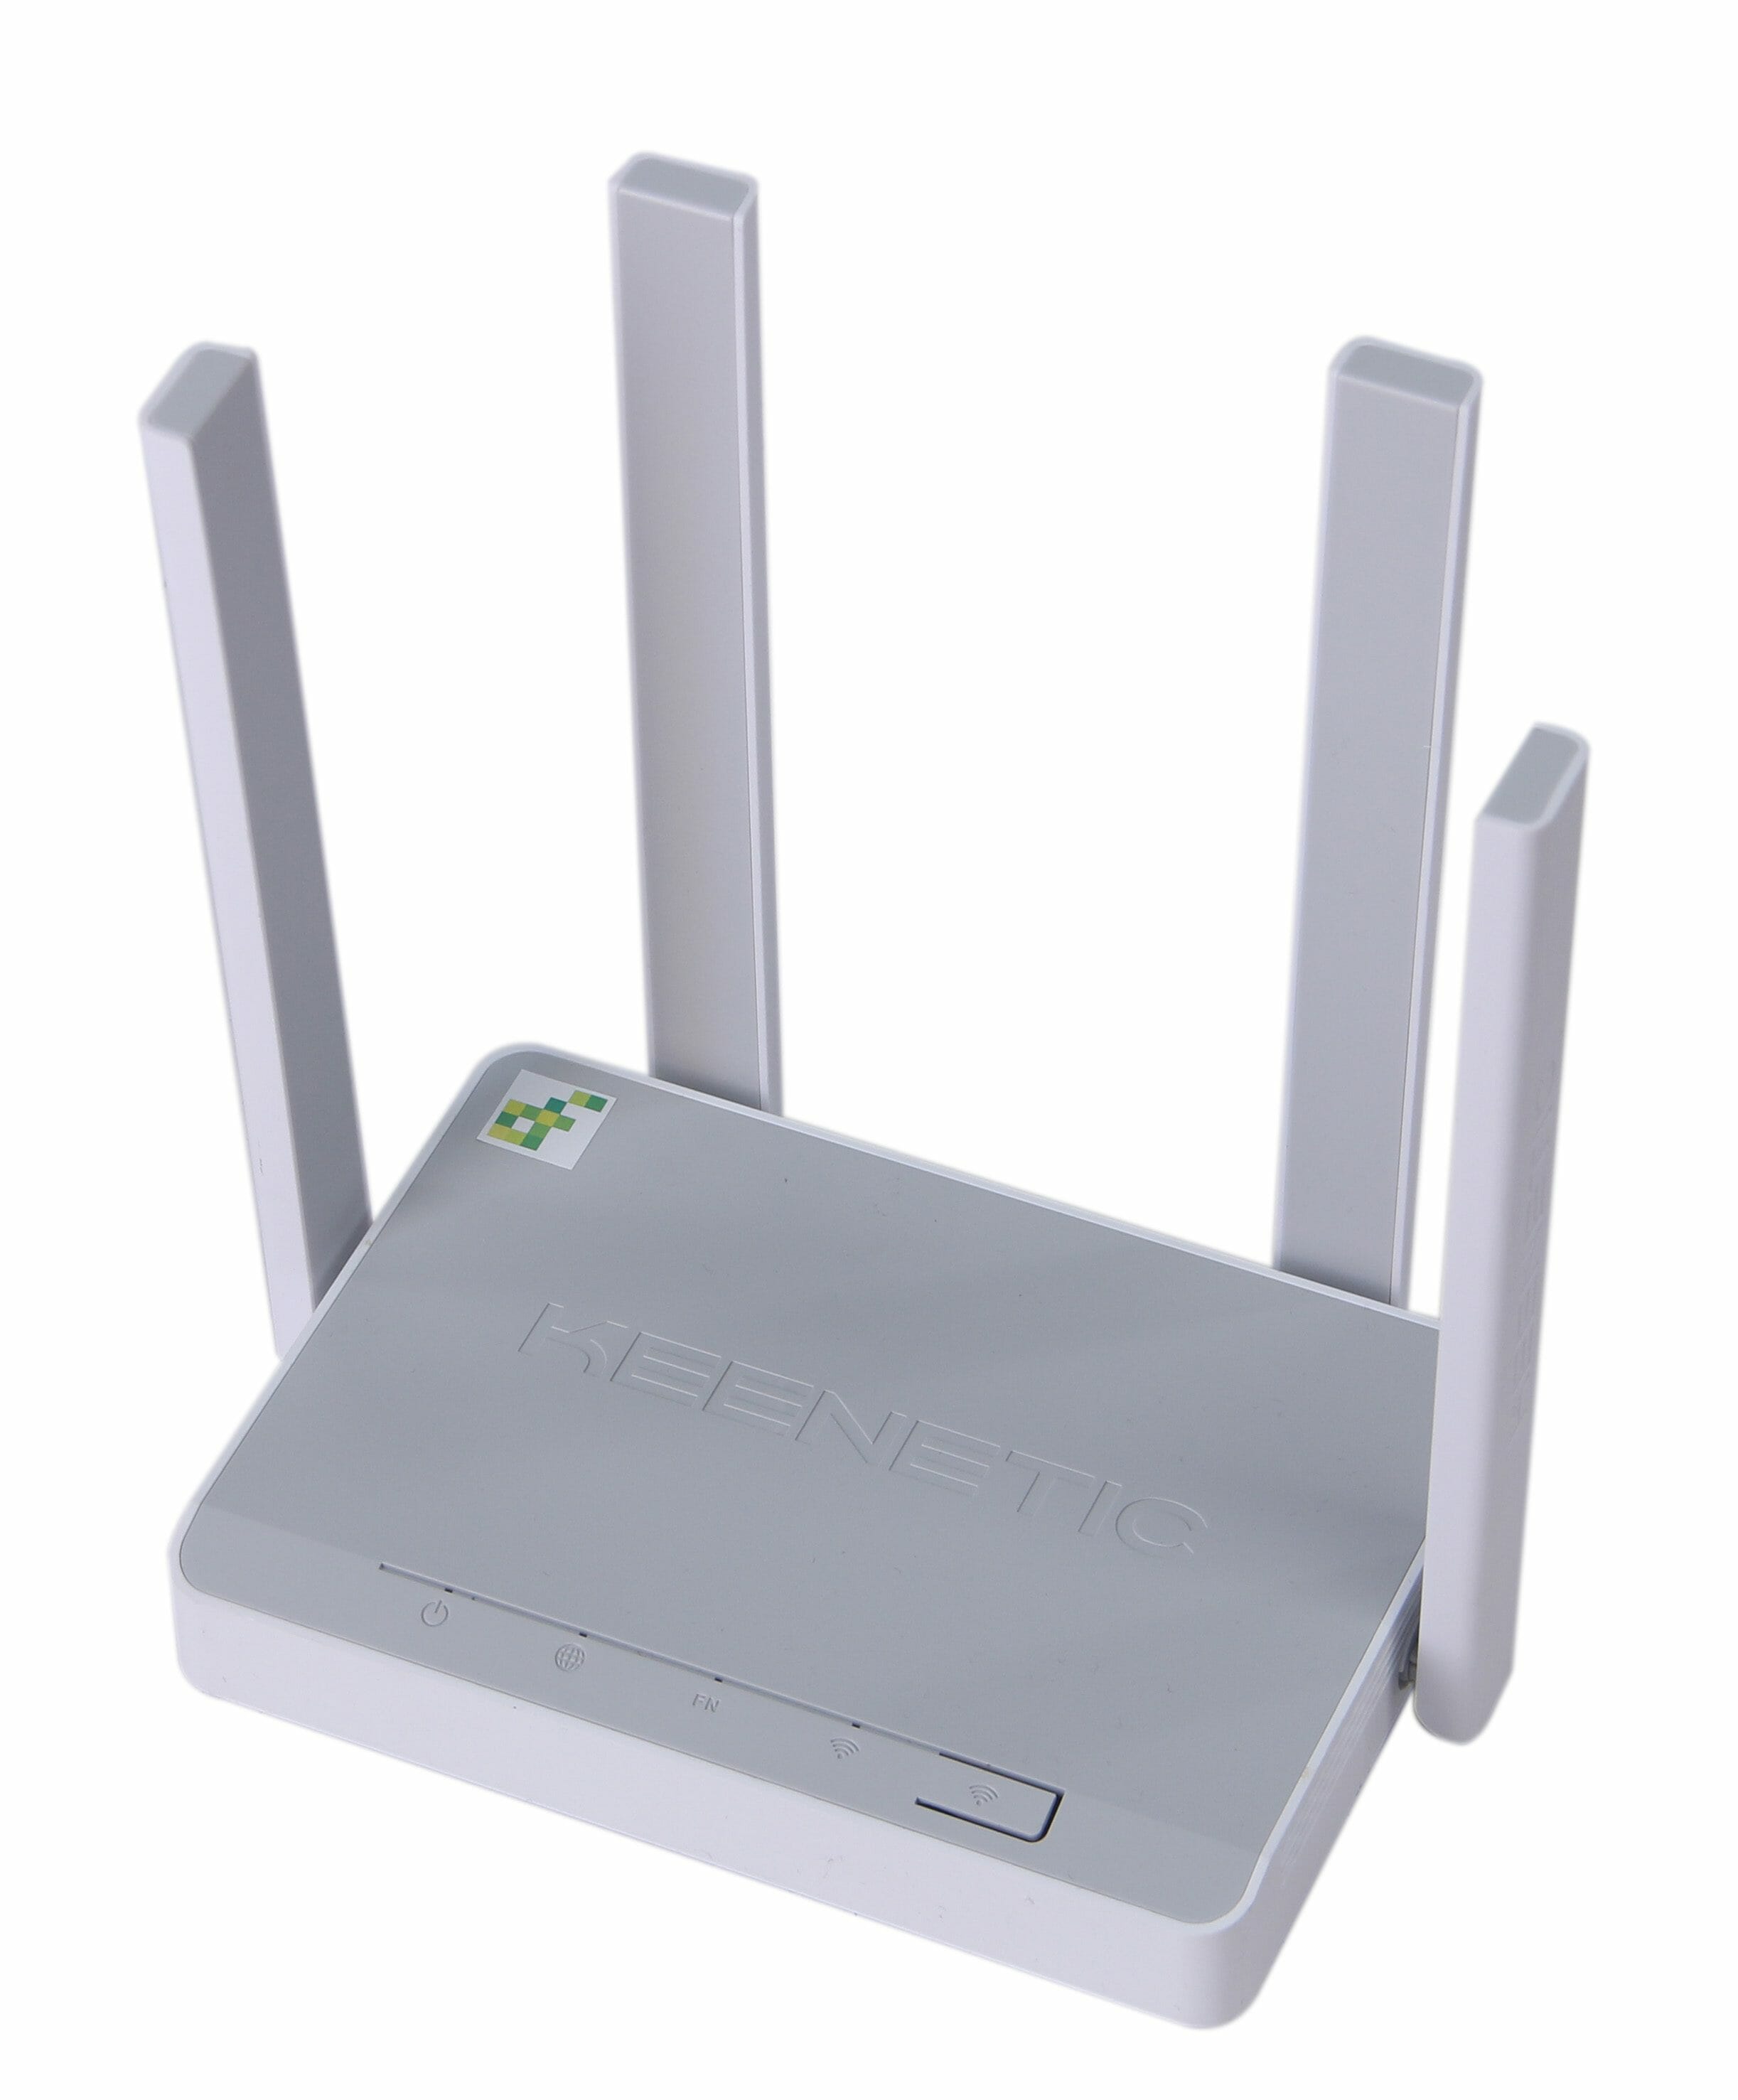 Keenetic extra kn-1710: настройка, обзор и характеристики беспроводного wi-fi роутера